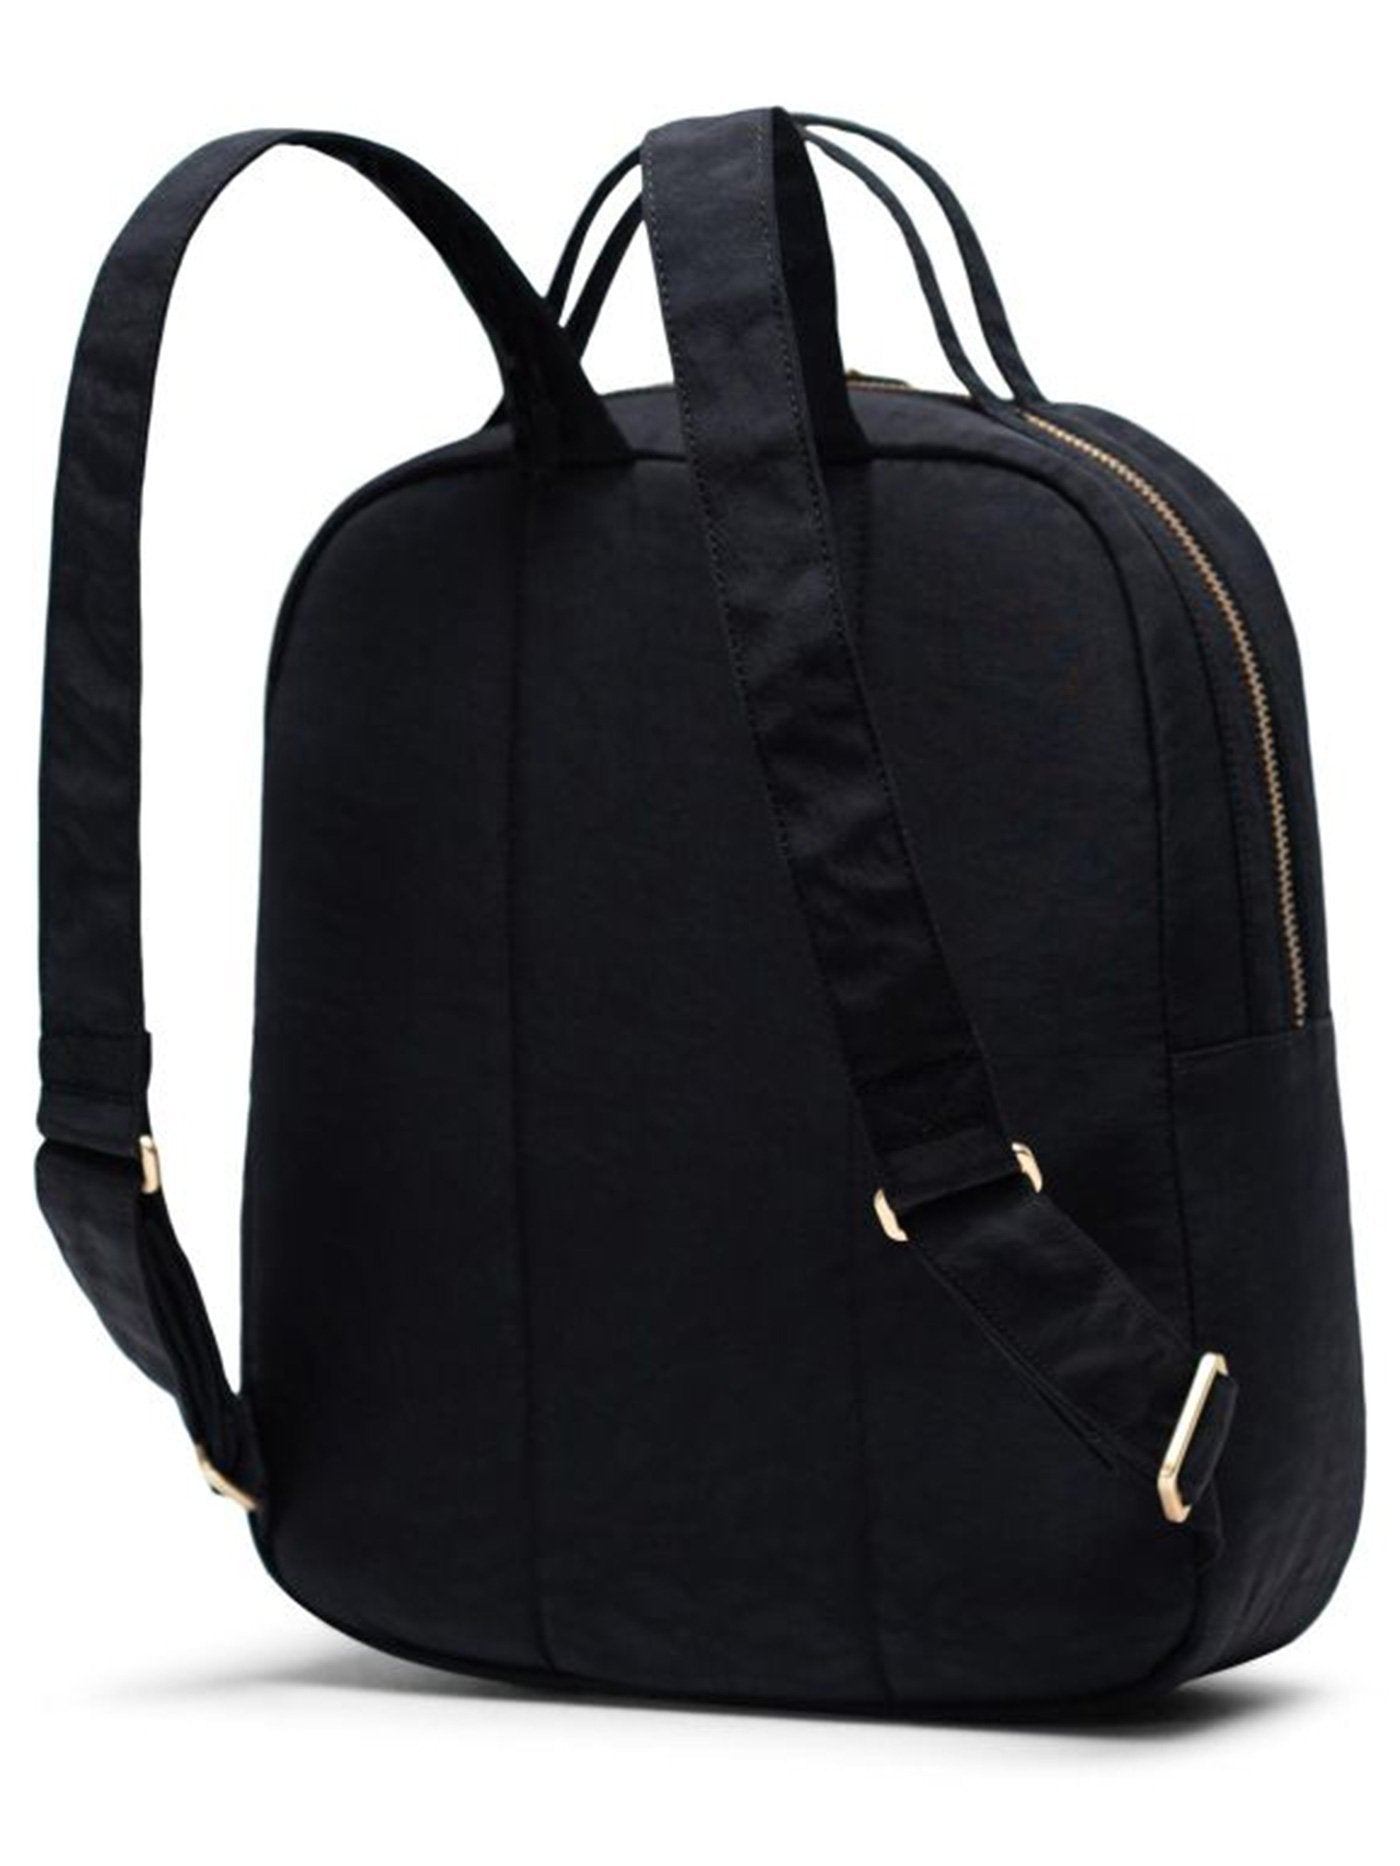 Herschel Orion Small Backpack